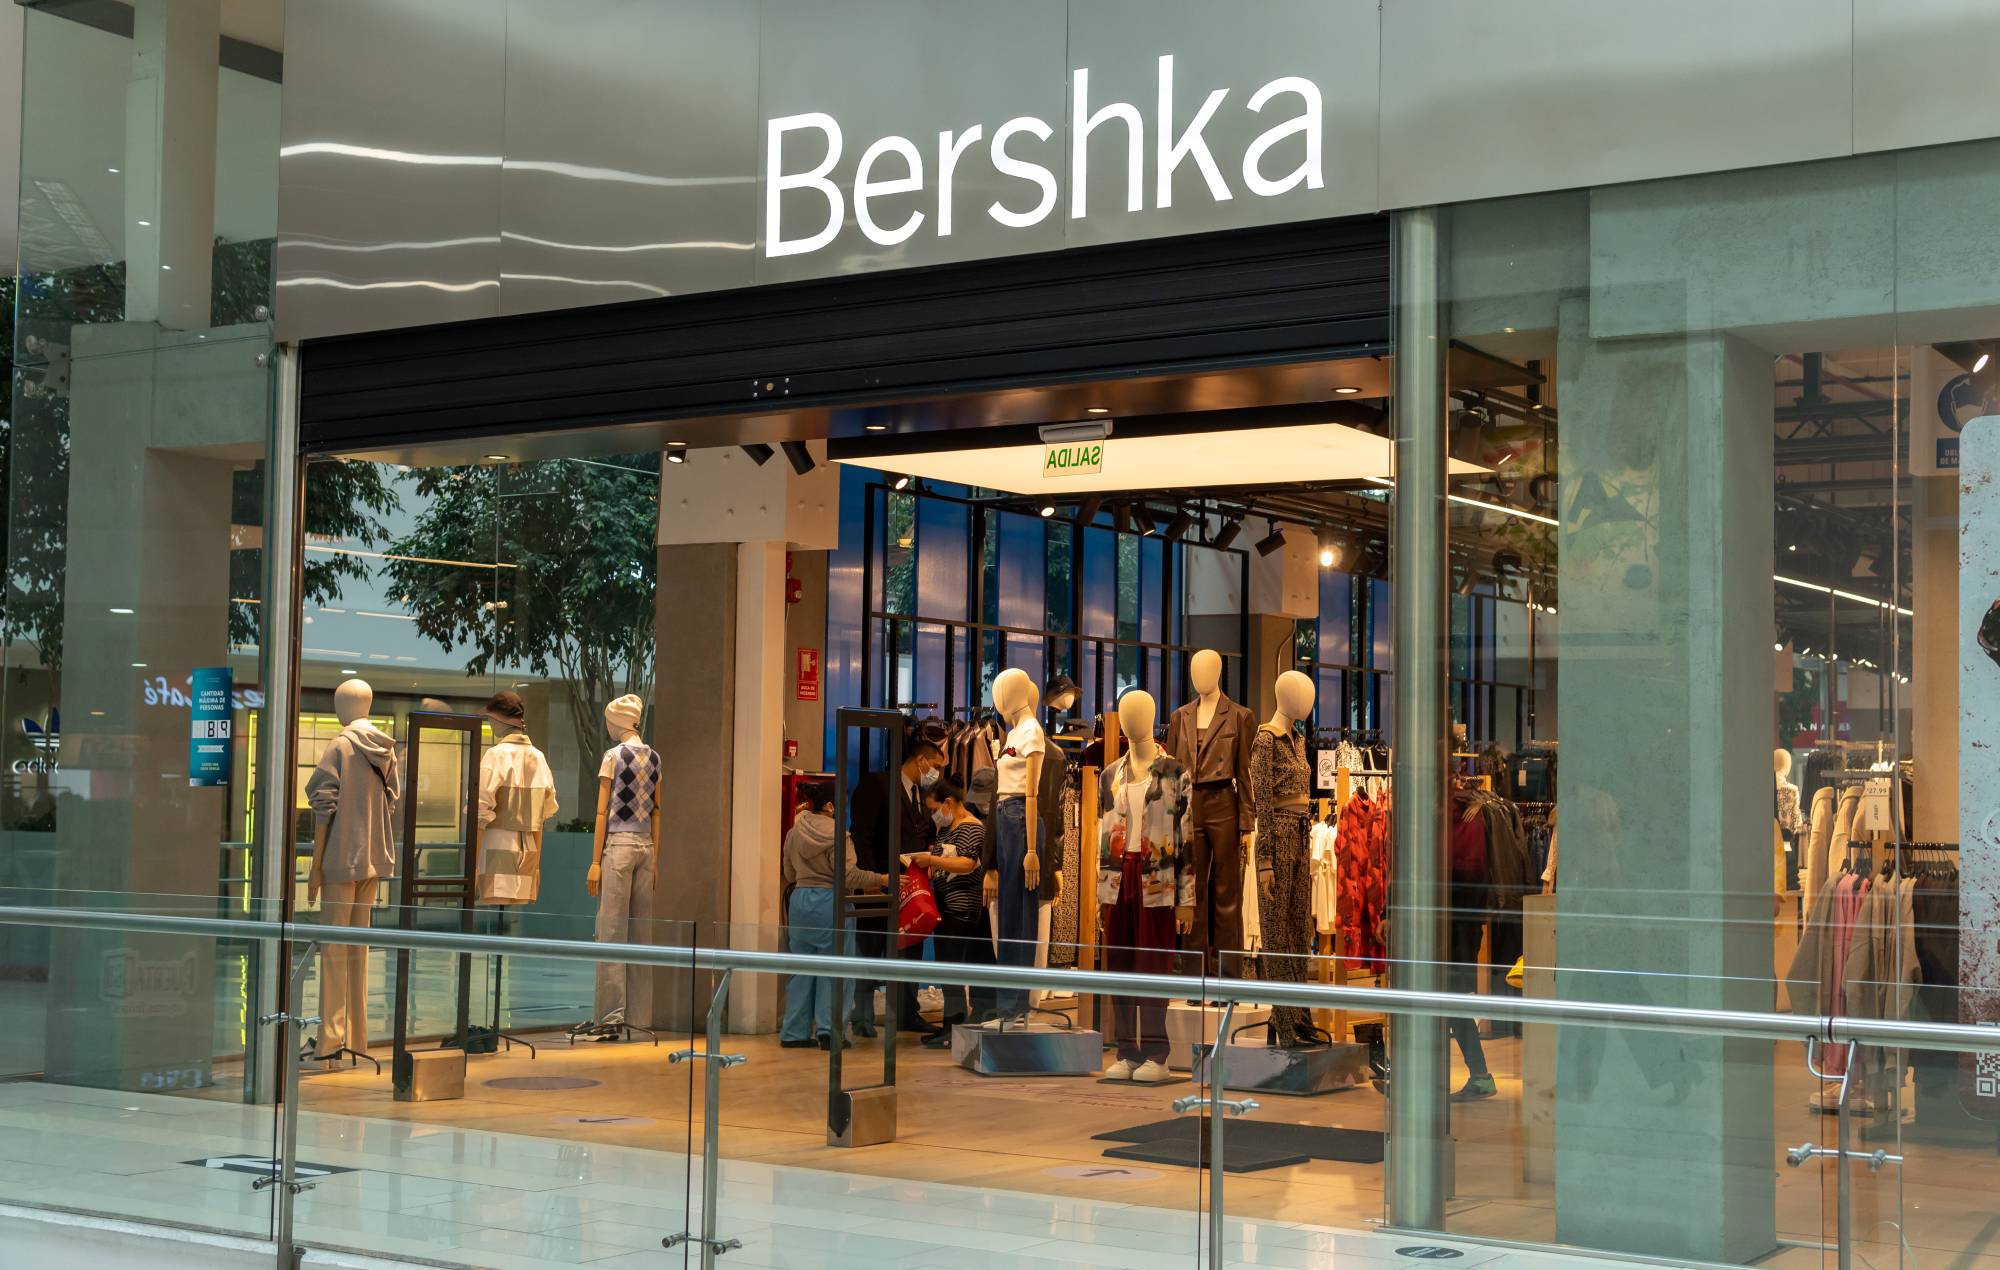 berksha store in a mall in Ecuador